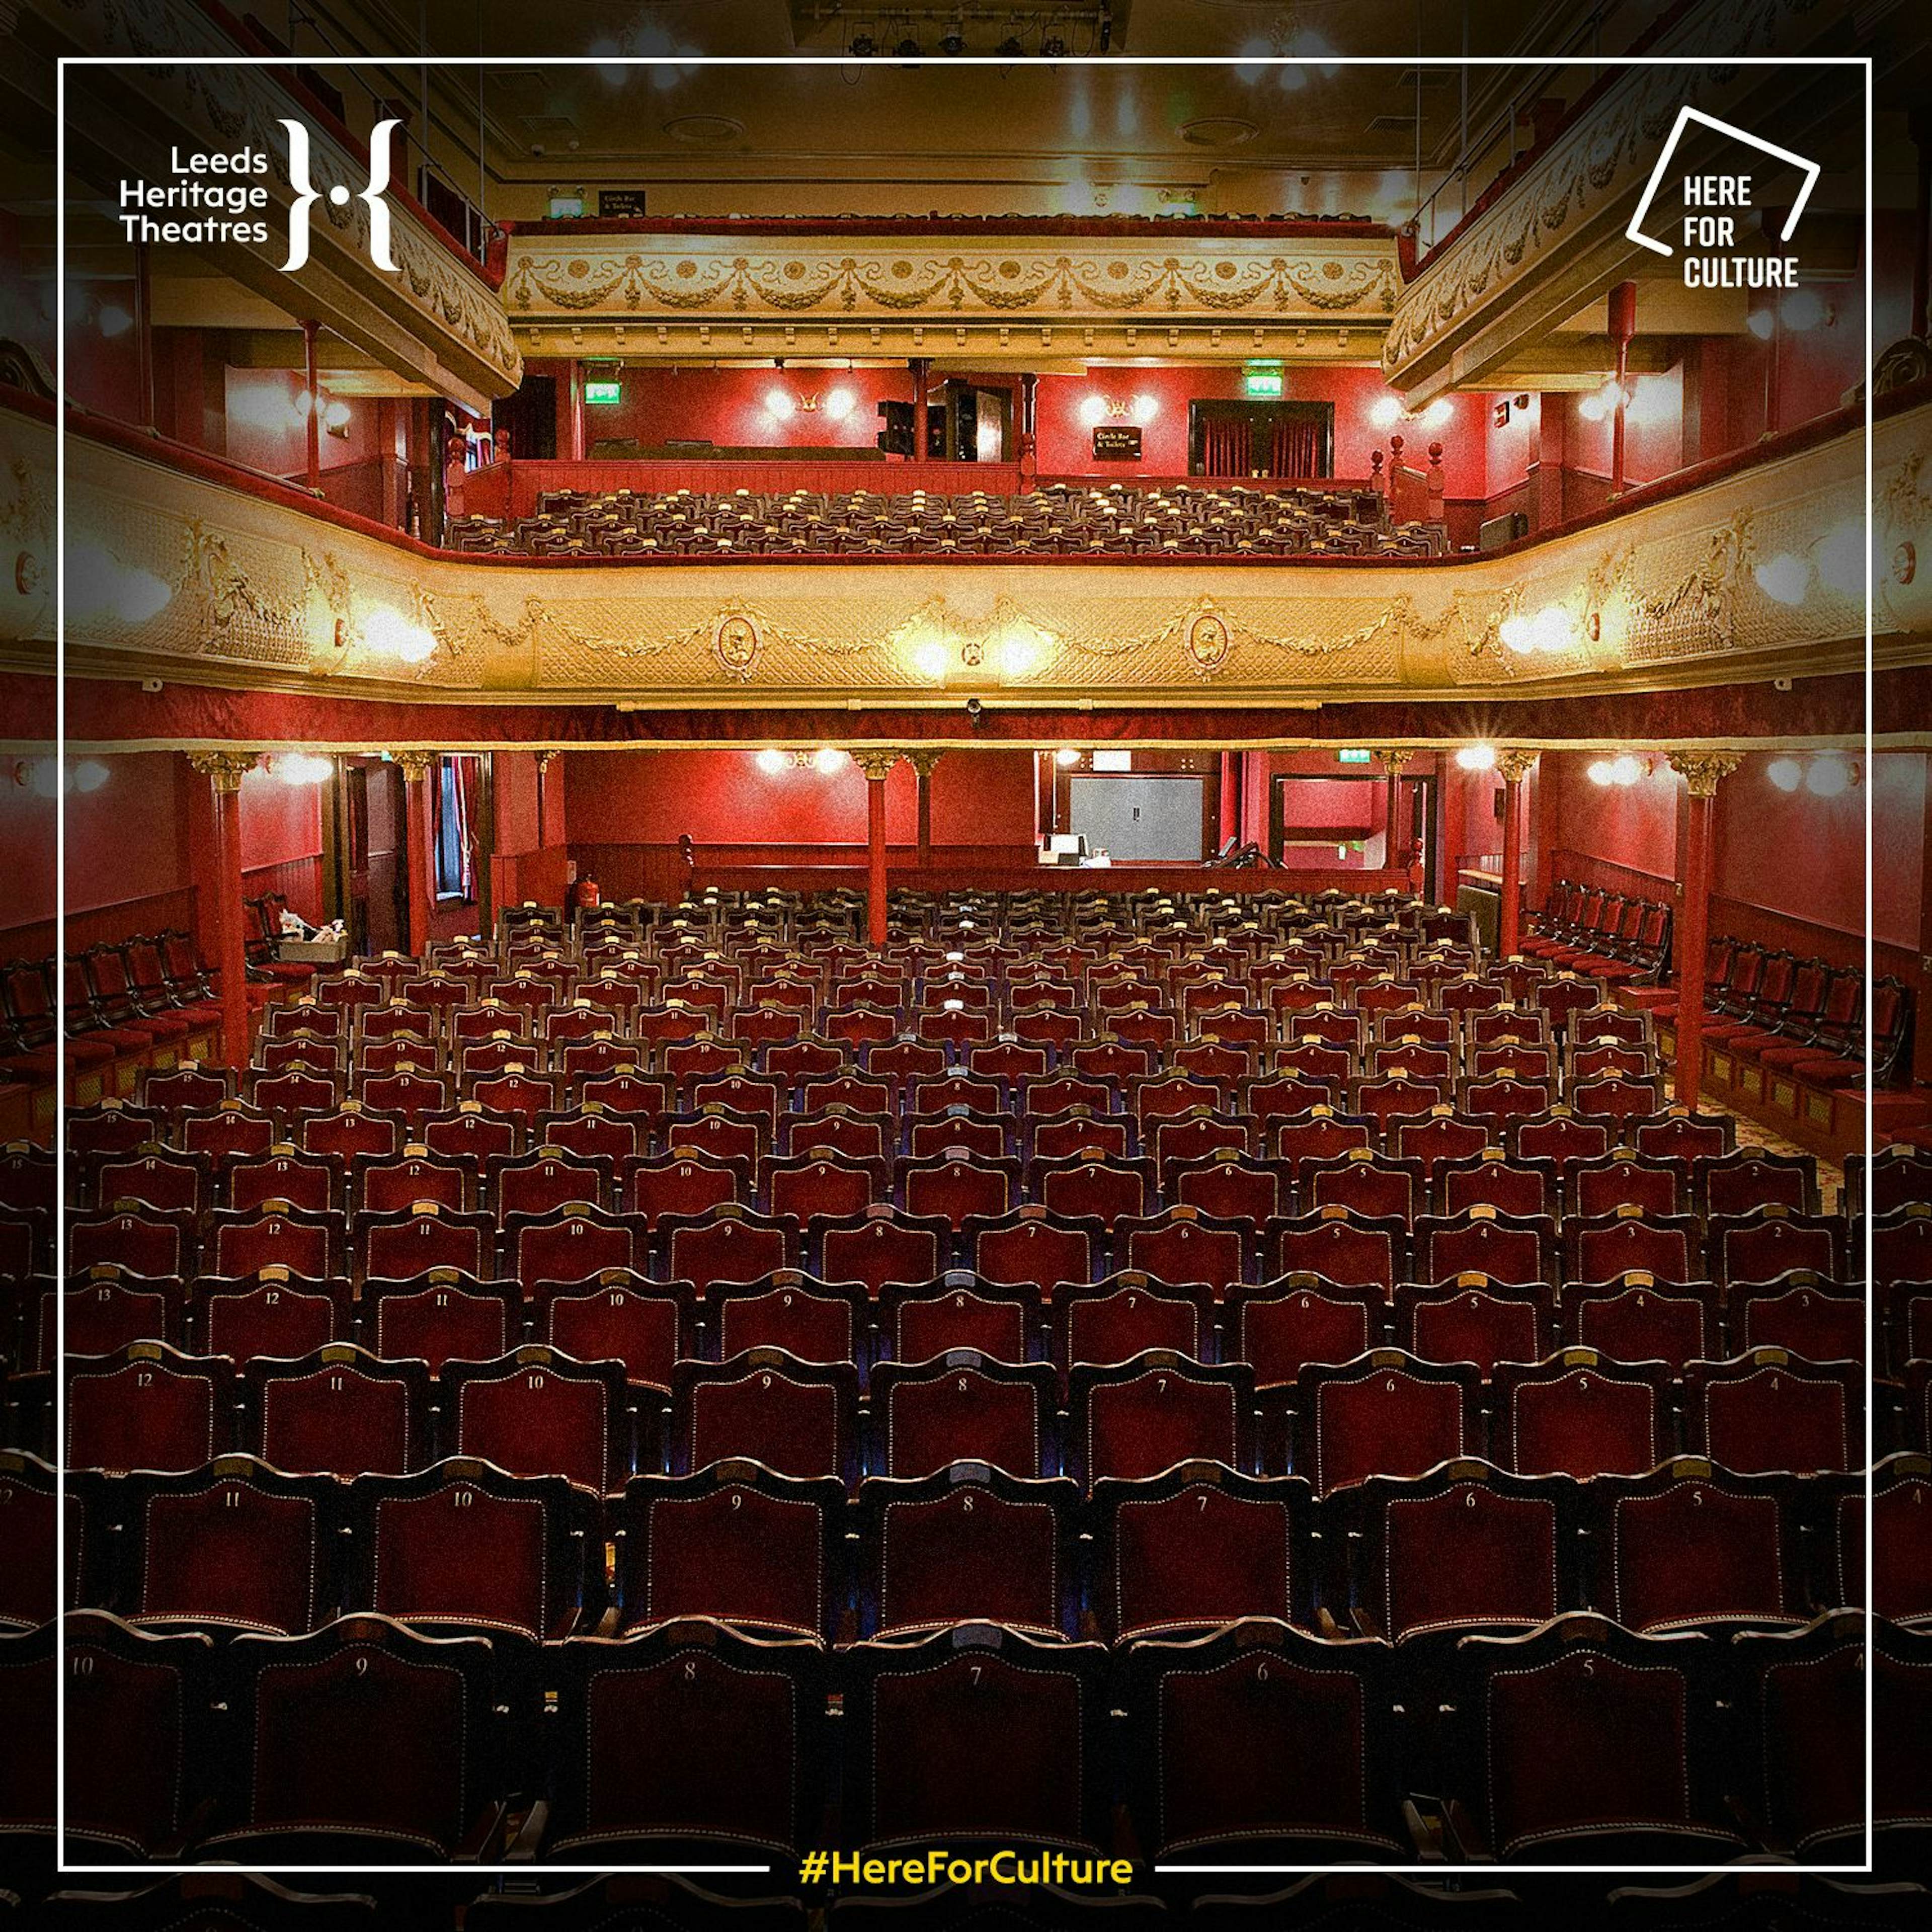 Leeds Heritage Theatres - image 2